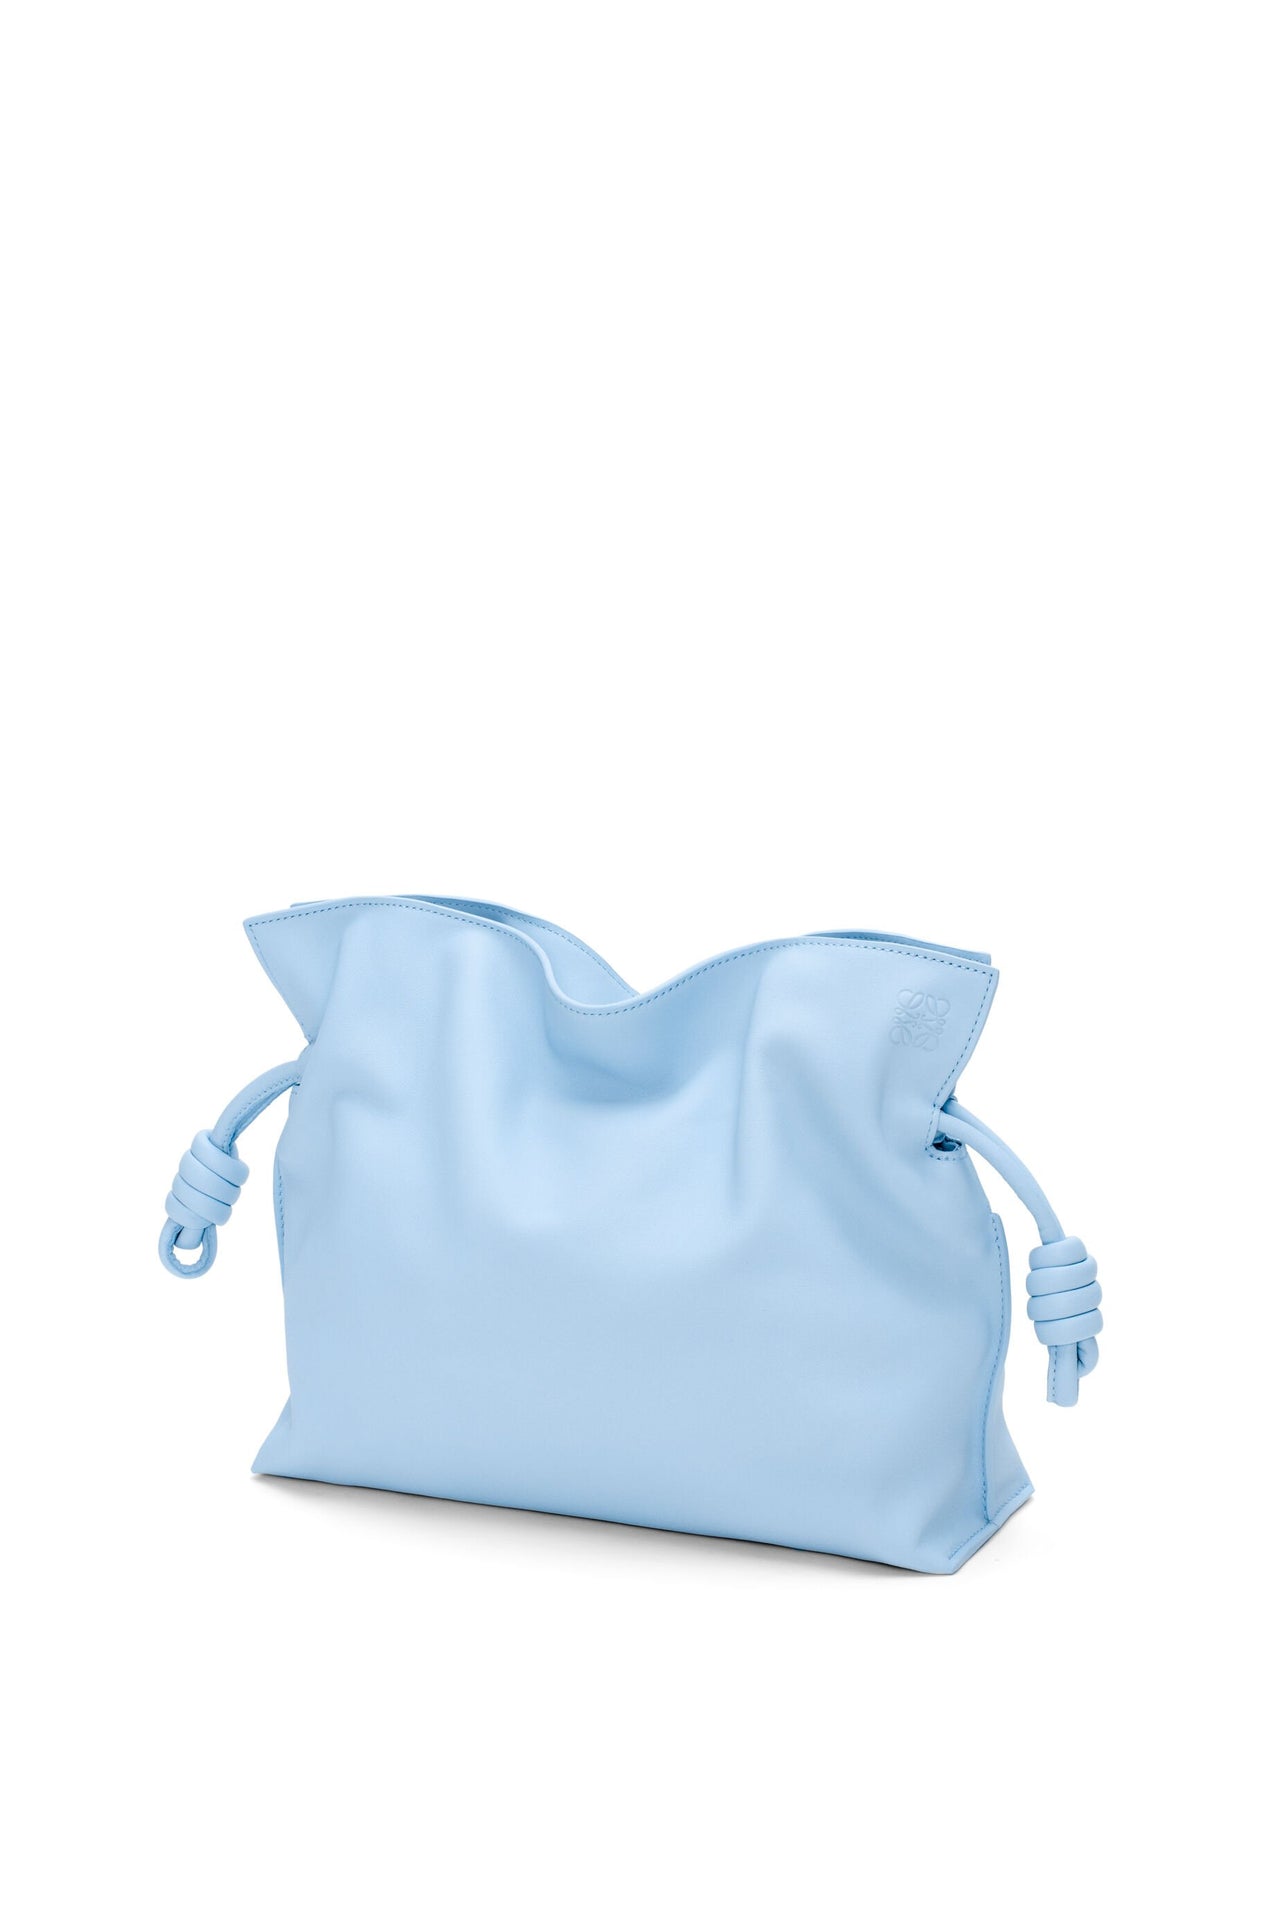 Loewe Medium Flamenco clutch in nappa calfskin (Colour: Dusty Blue)